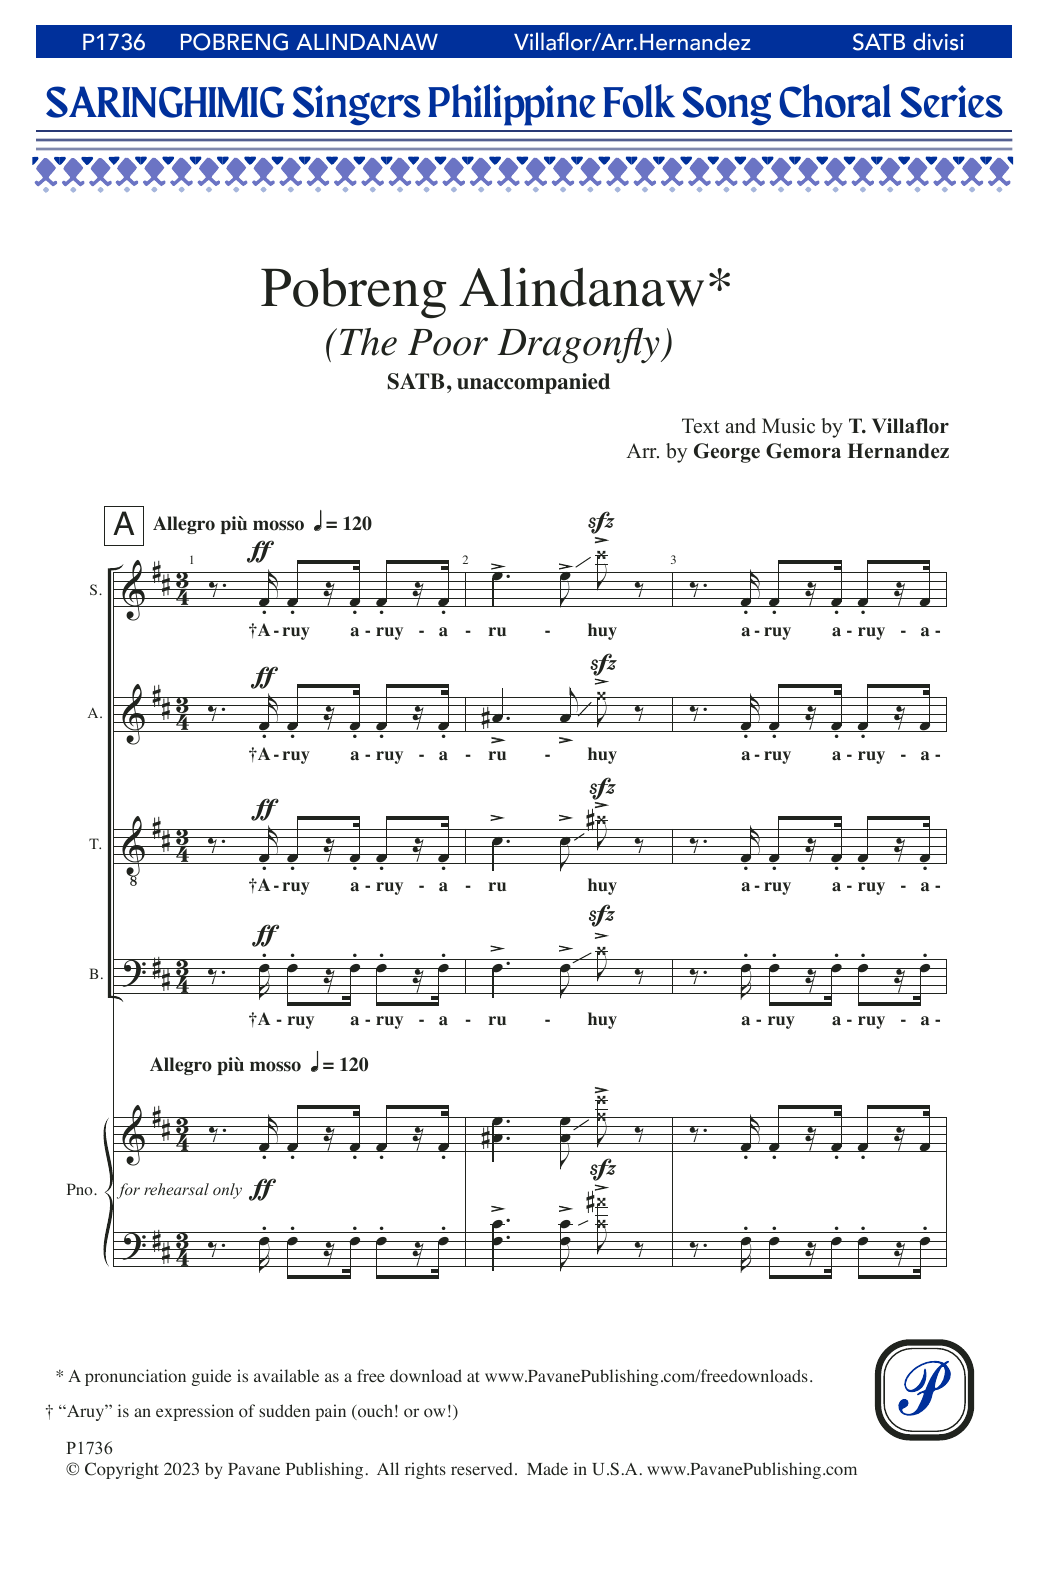 George Gemora Hernandez Pobreng Alindanaw (The Poor Dragonfly) Sheet Music Notes & Chords for SATB Choir - Download or Print PDF